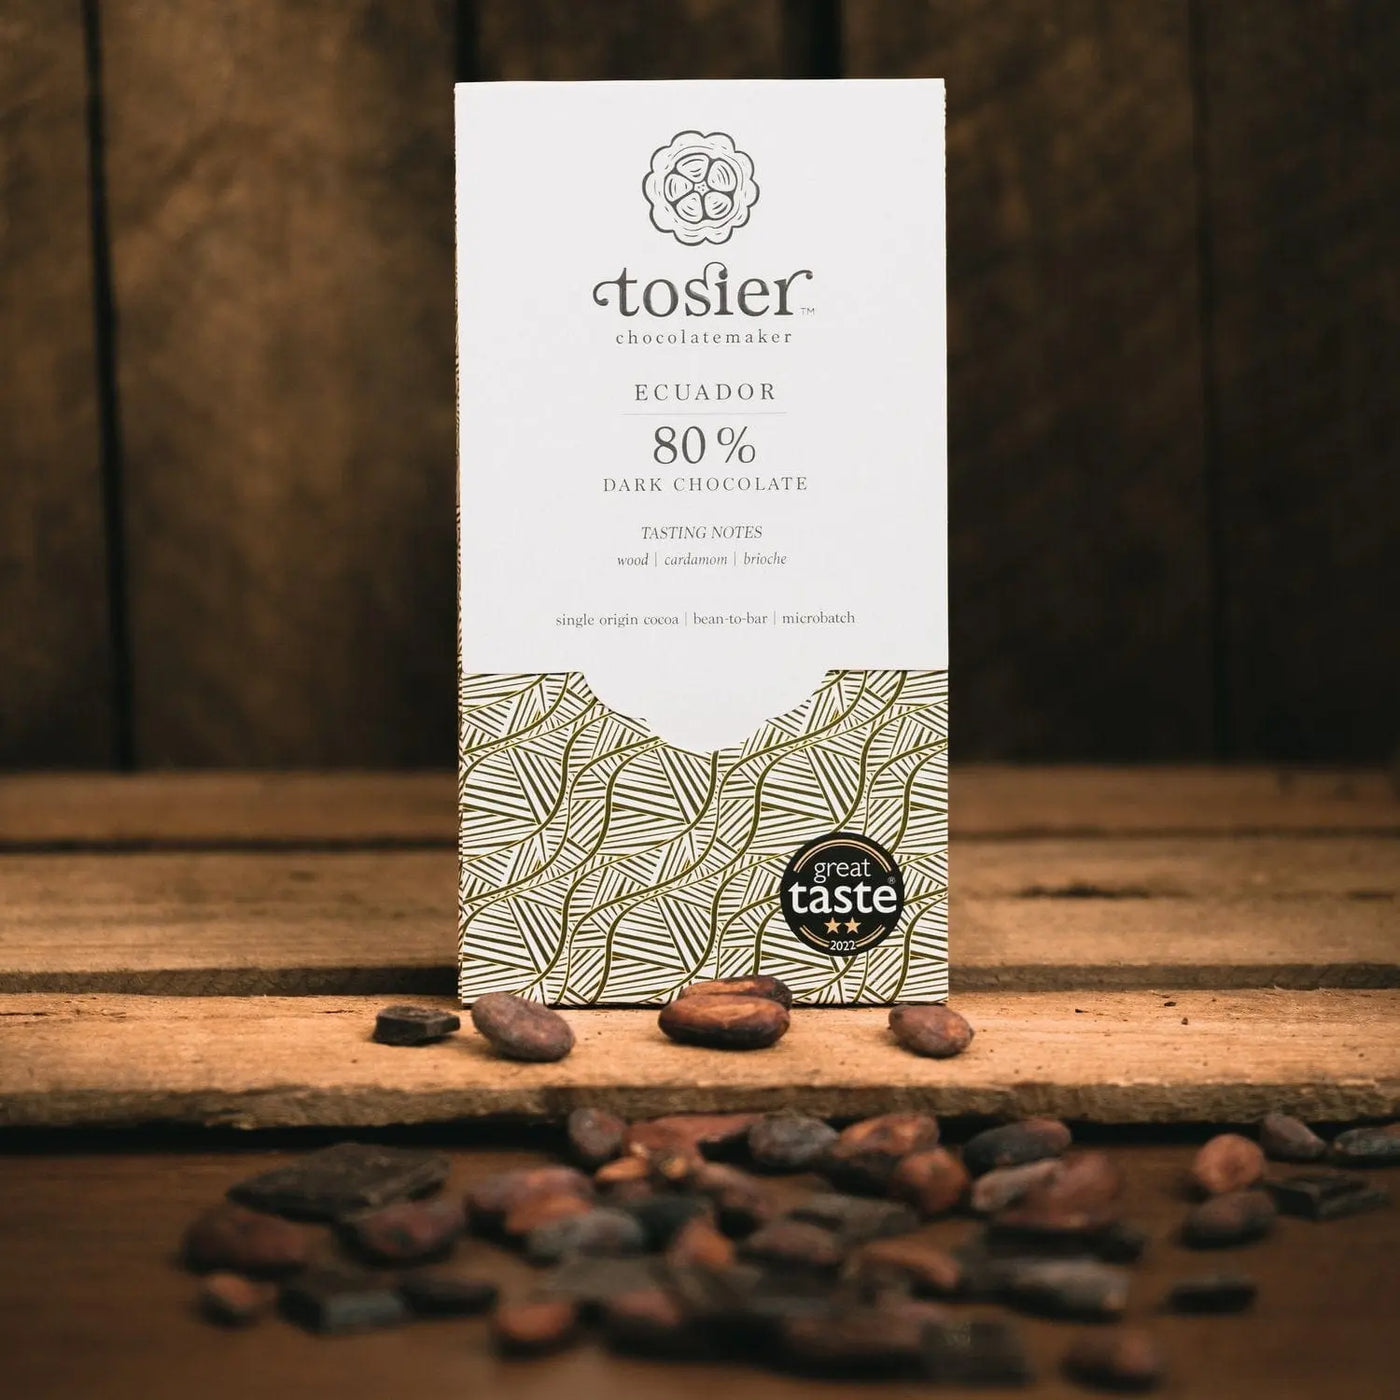 Tosier Chocolate 80% Hacienda Limon Ecuador 2020 Harvest 60g bar - Migration Museum Shop